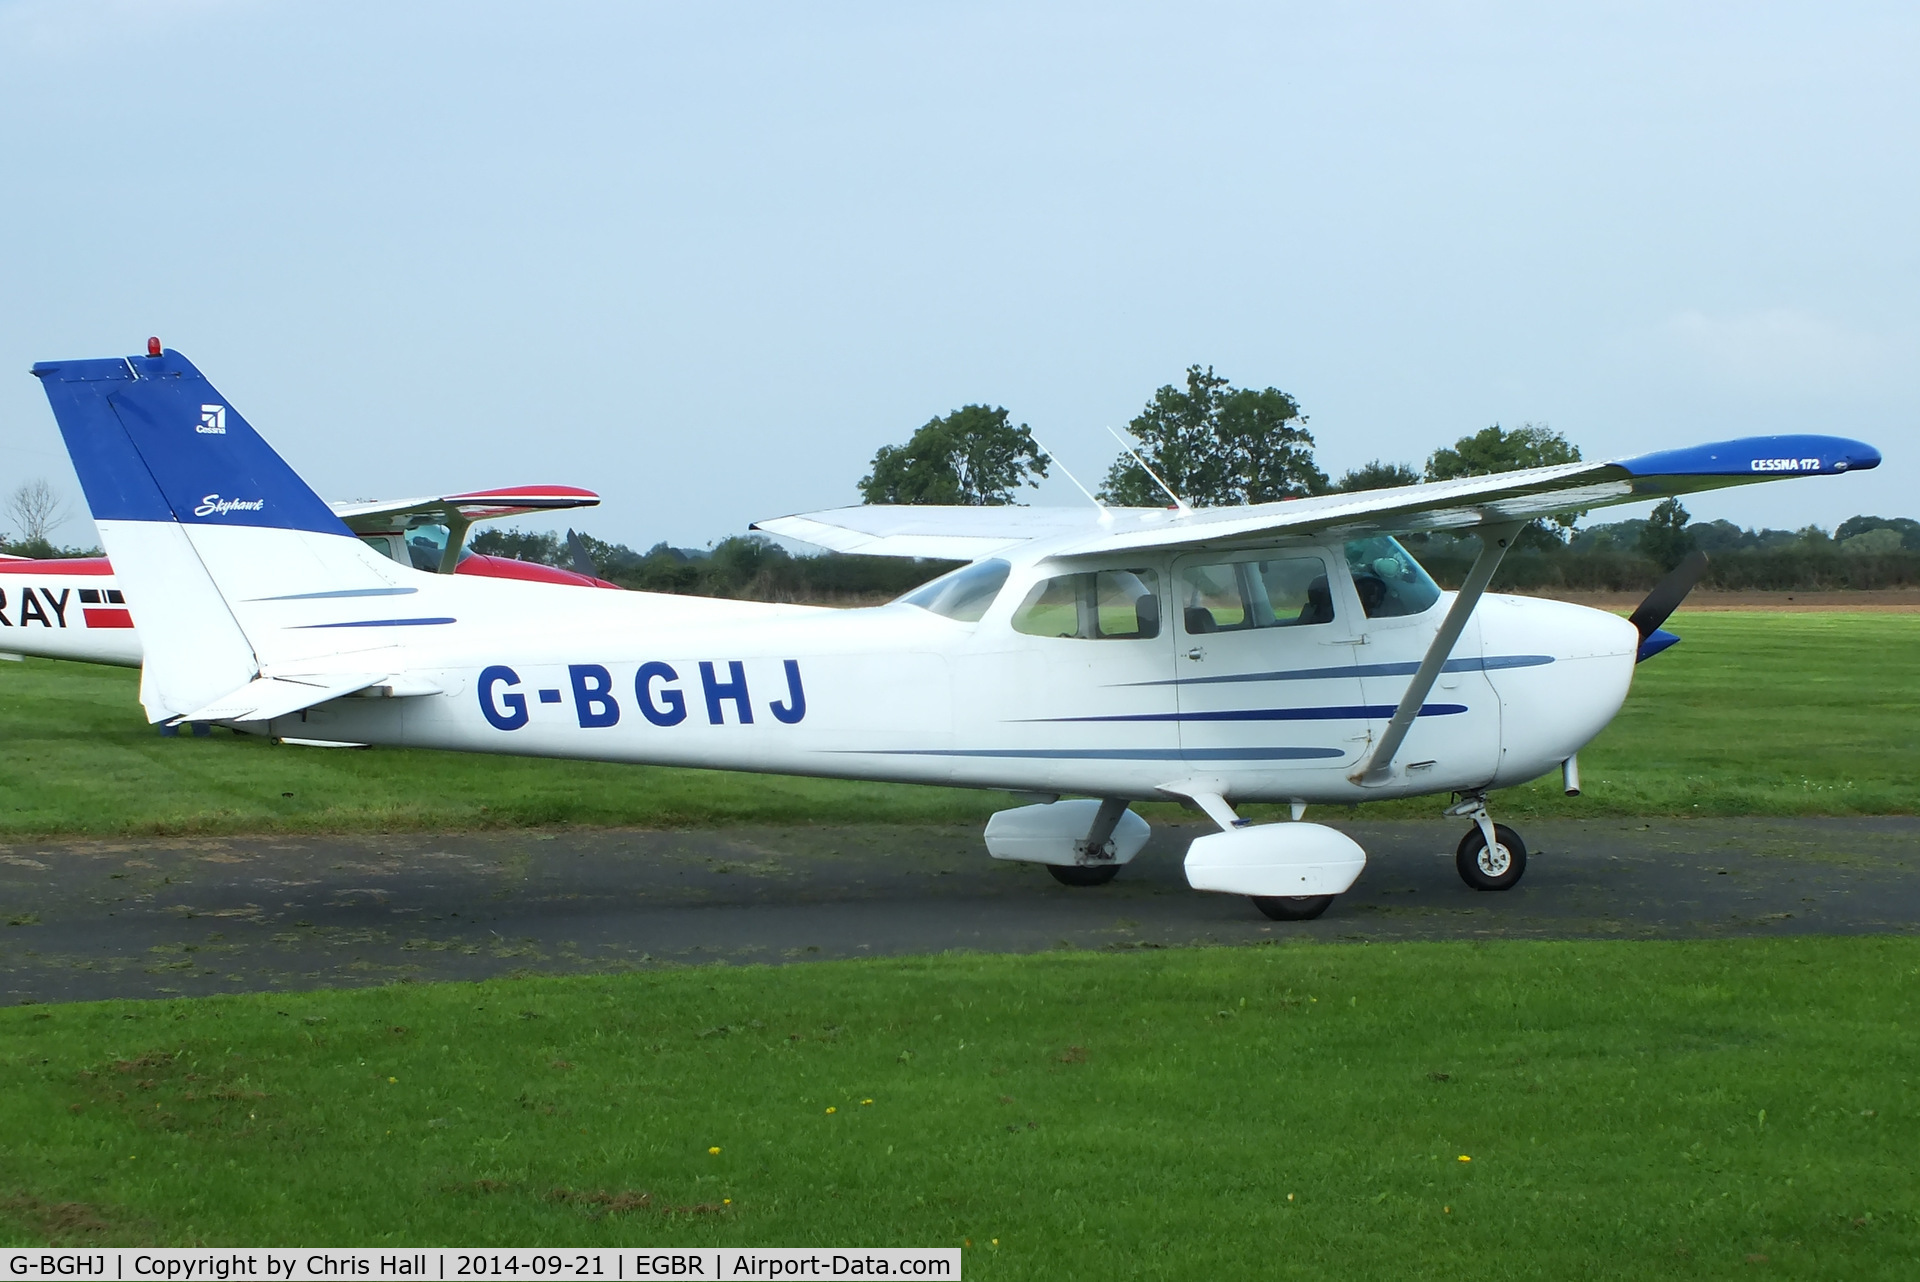 G-BGHJ, 1979 Reims F172N Skyhawk C/N 1777, at Breighton's Heli Fly-in, 2014